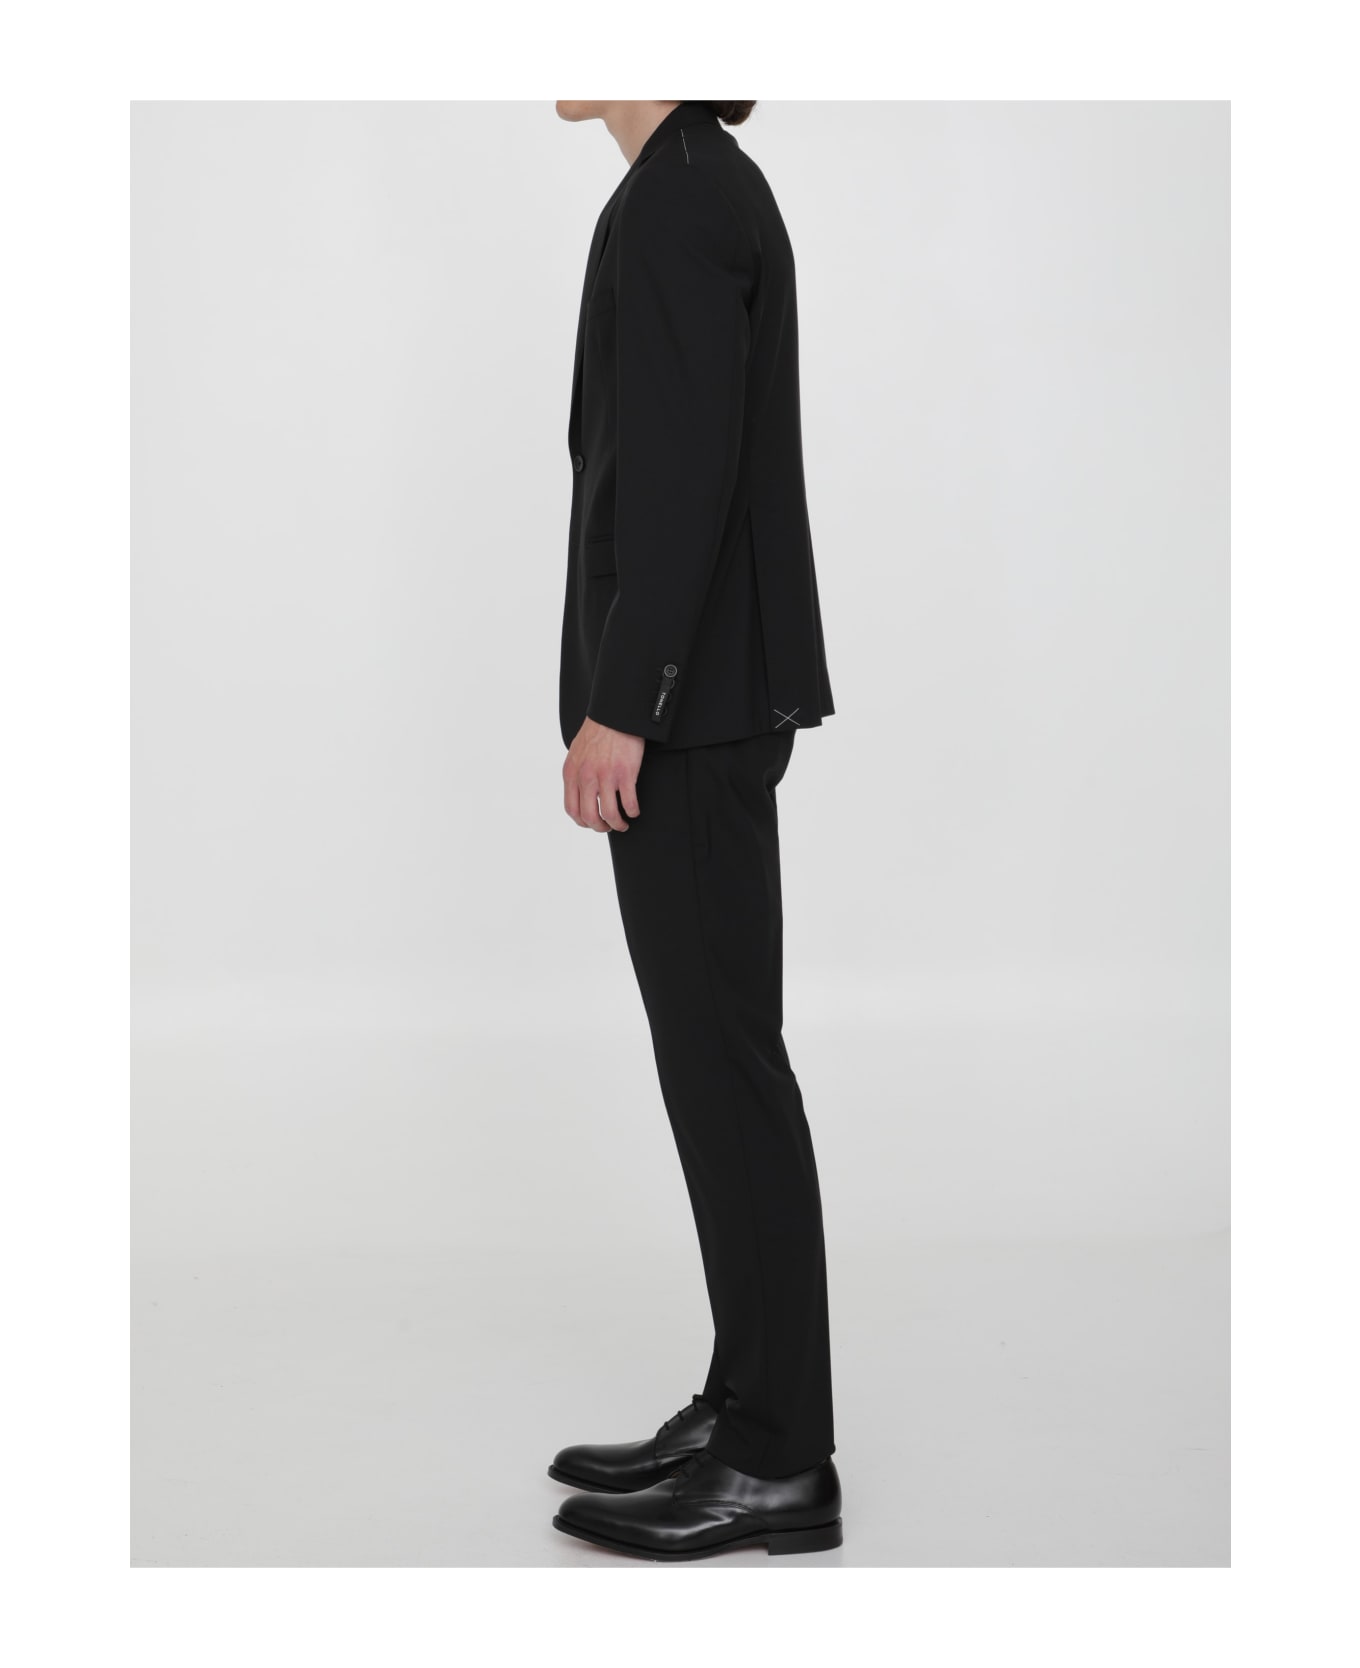 Tonello Black Stretch Wool Suit - BLACK